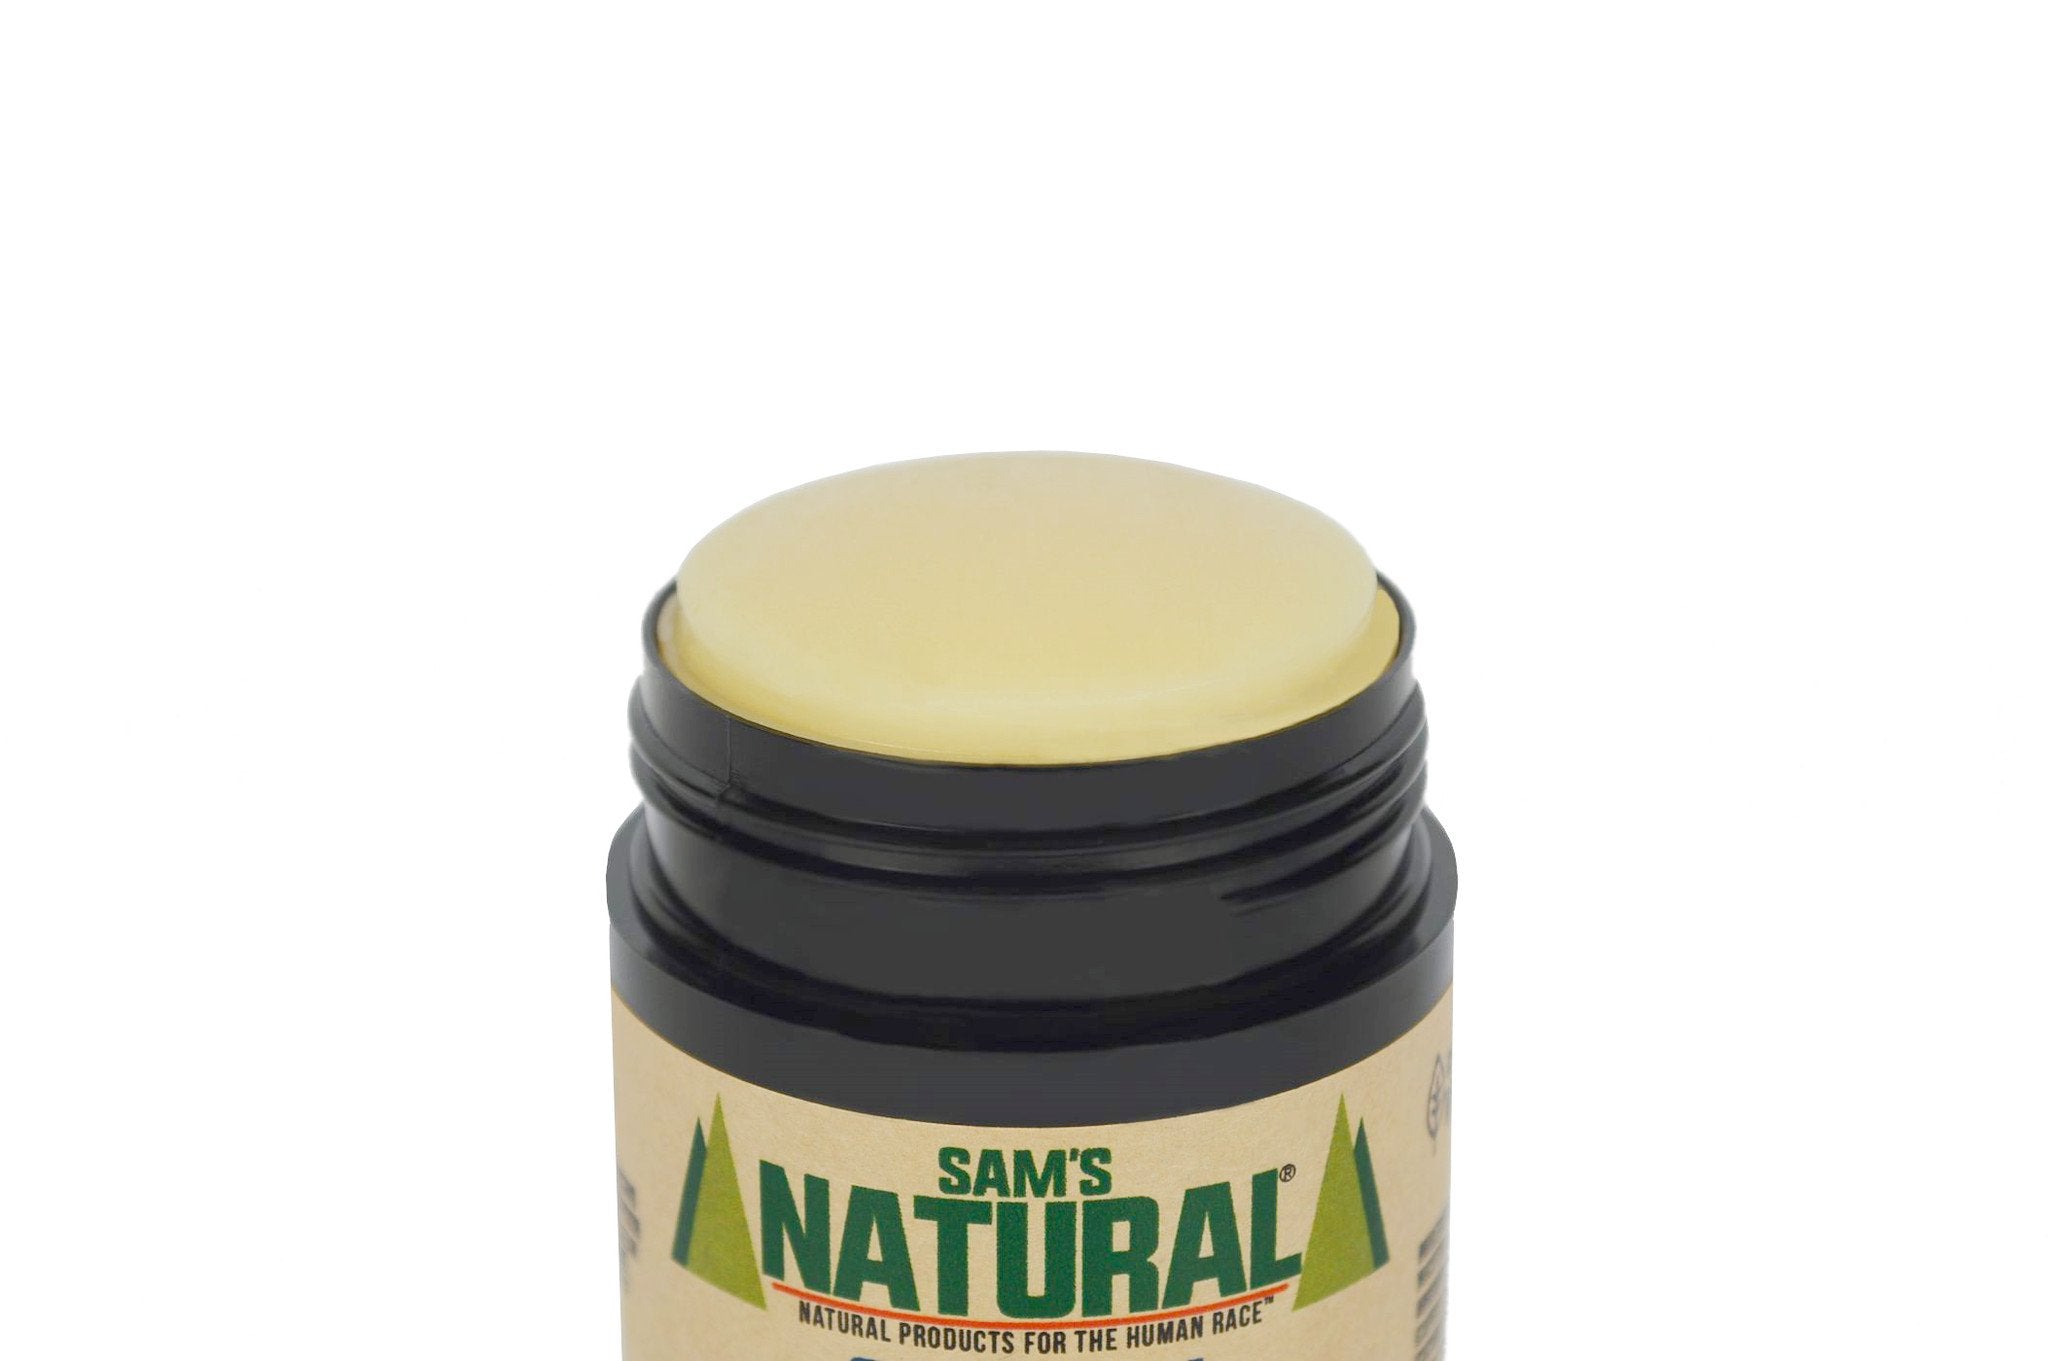 Natural Deodorant, Original Sam's